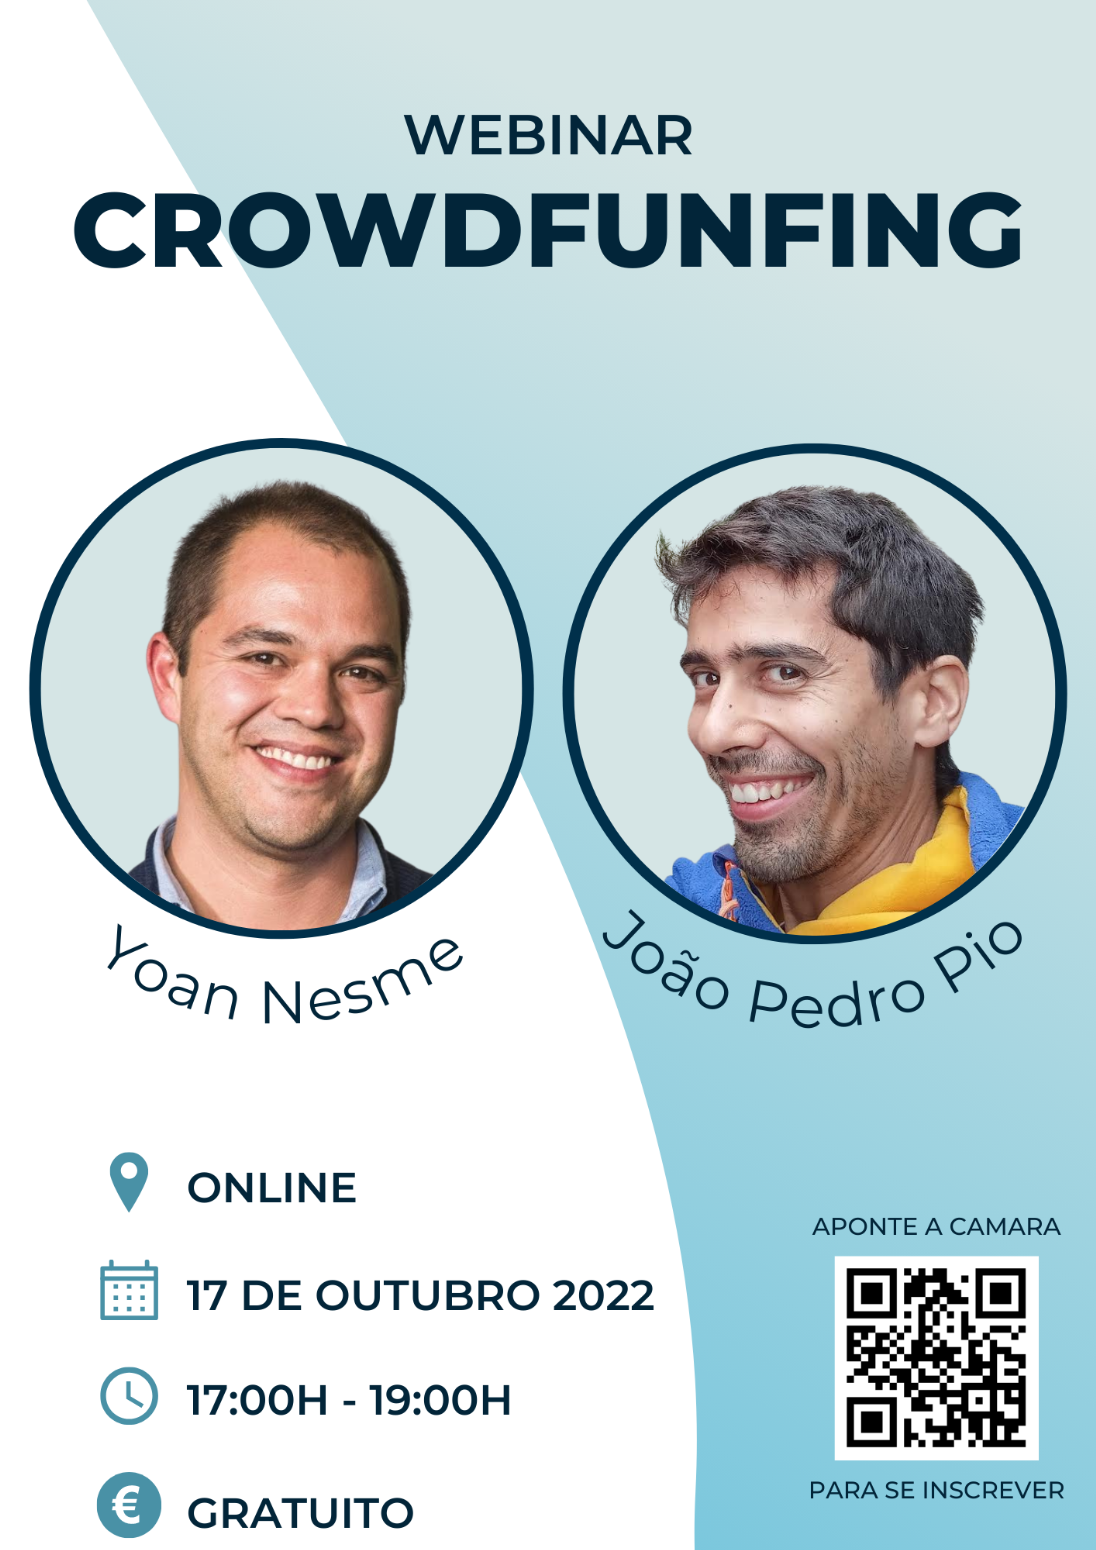 Webinar Crowdfunding por Colagos no próximo dia 17 de Outubro